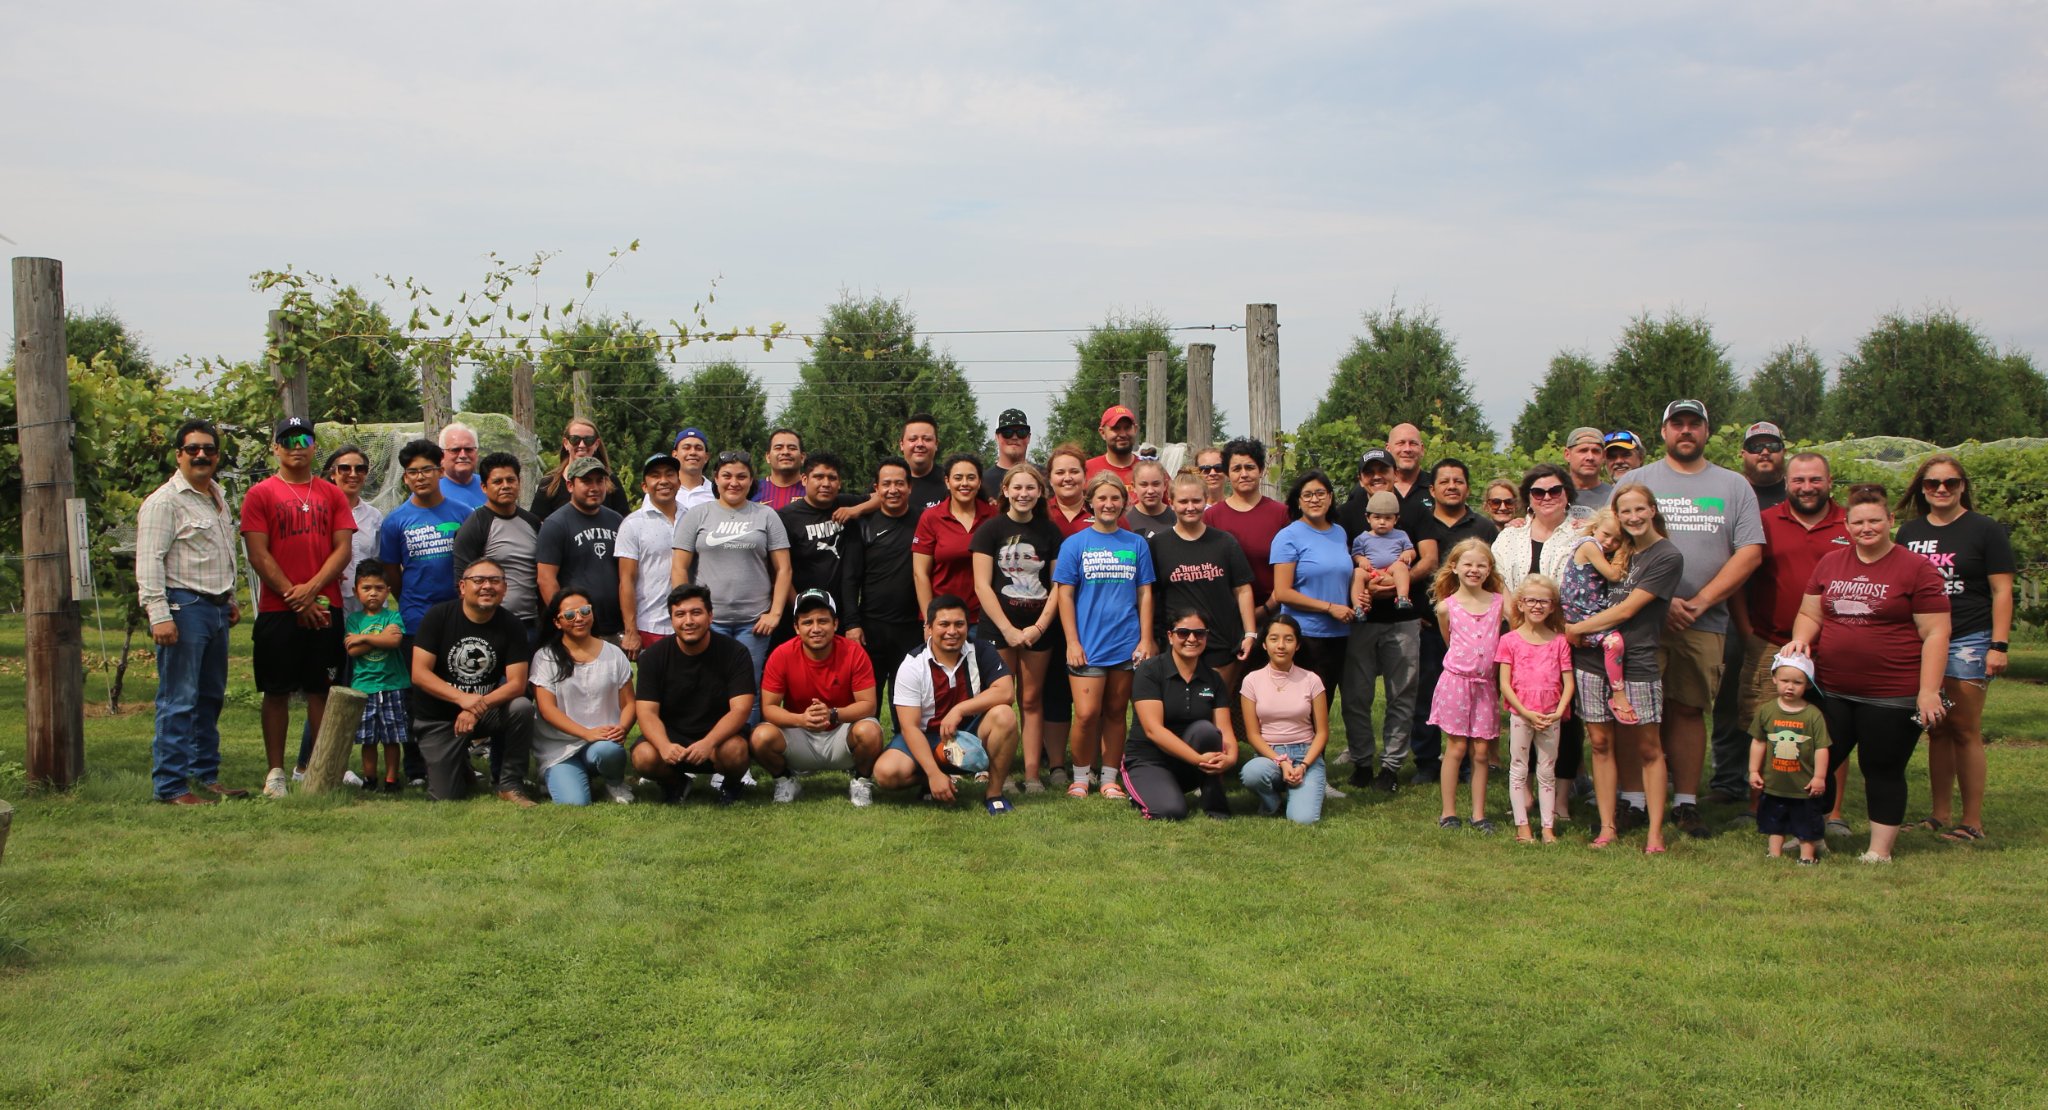 Northern Iowa picnic participants